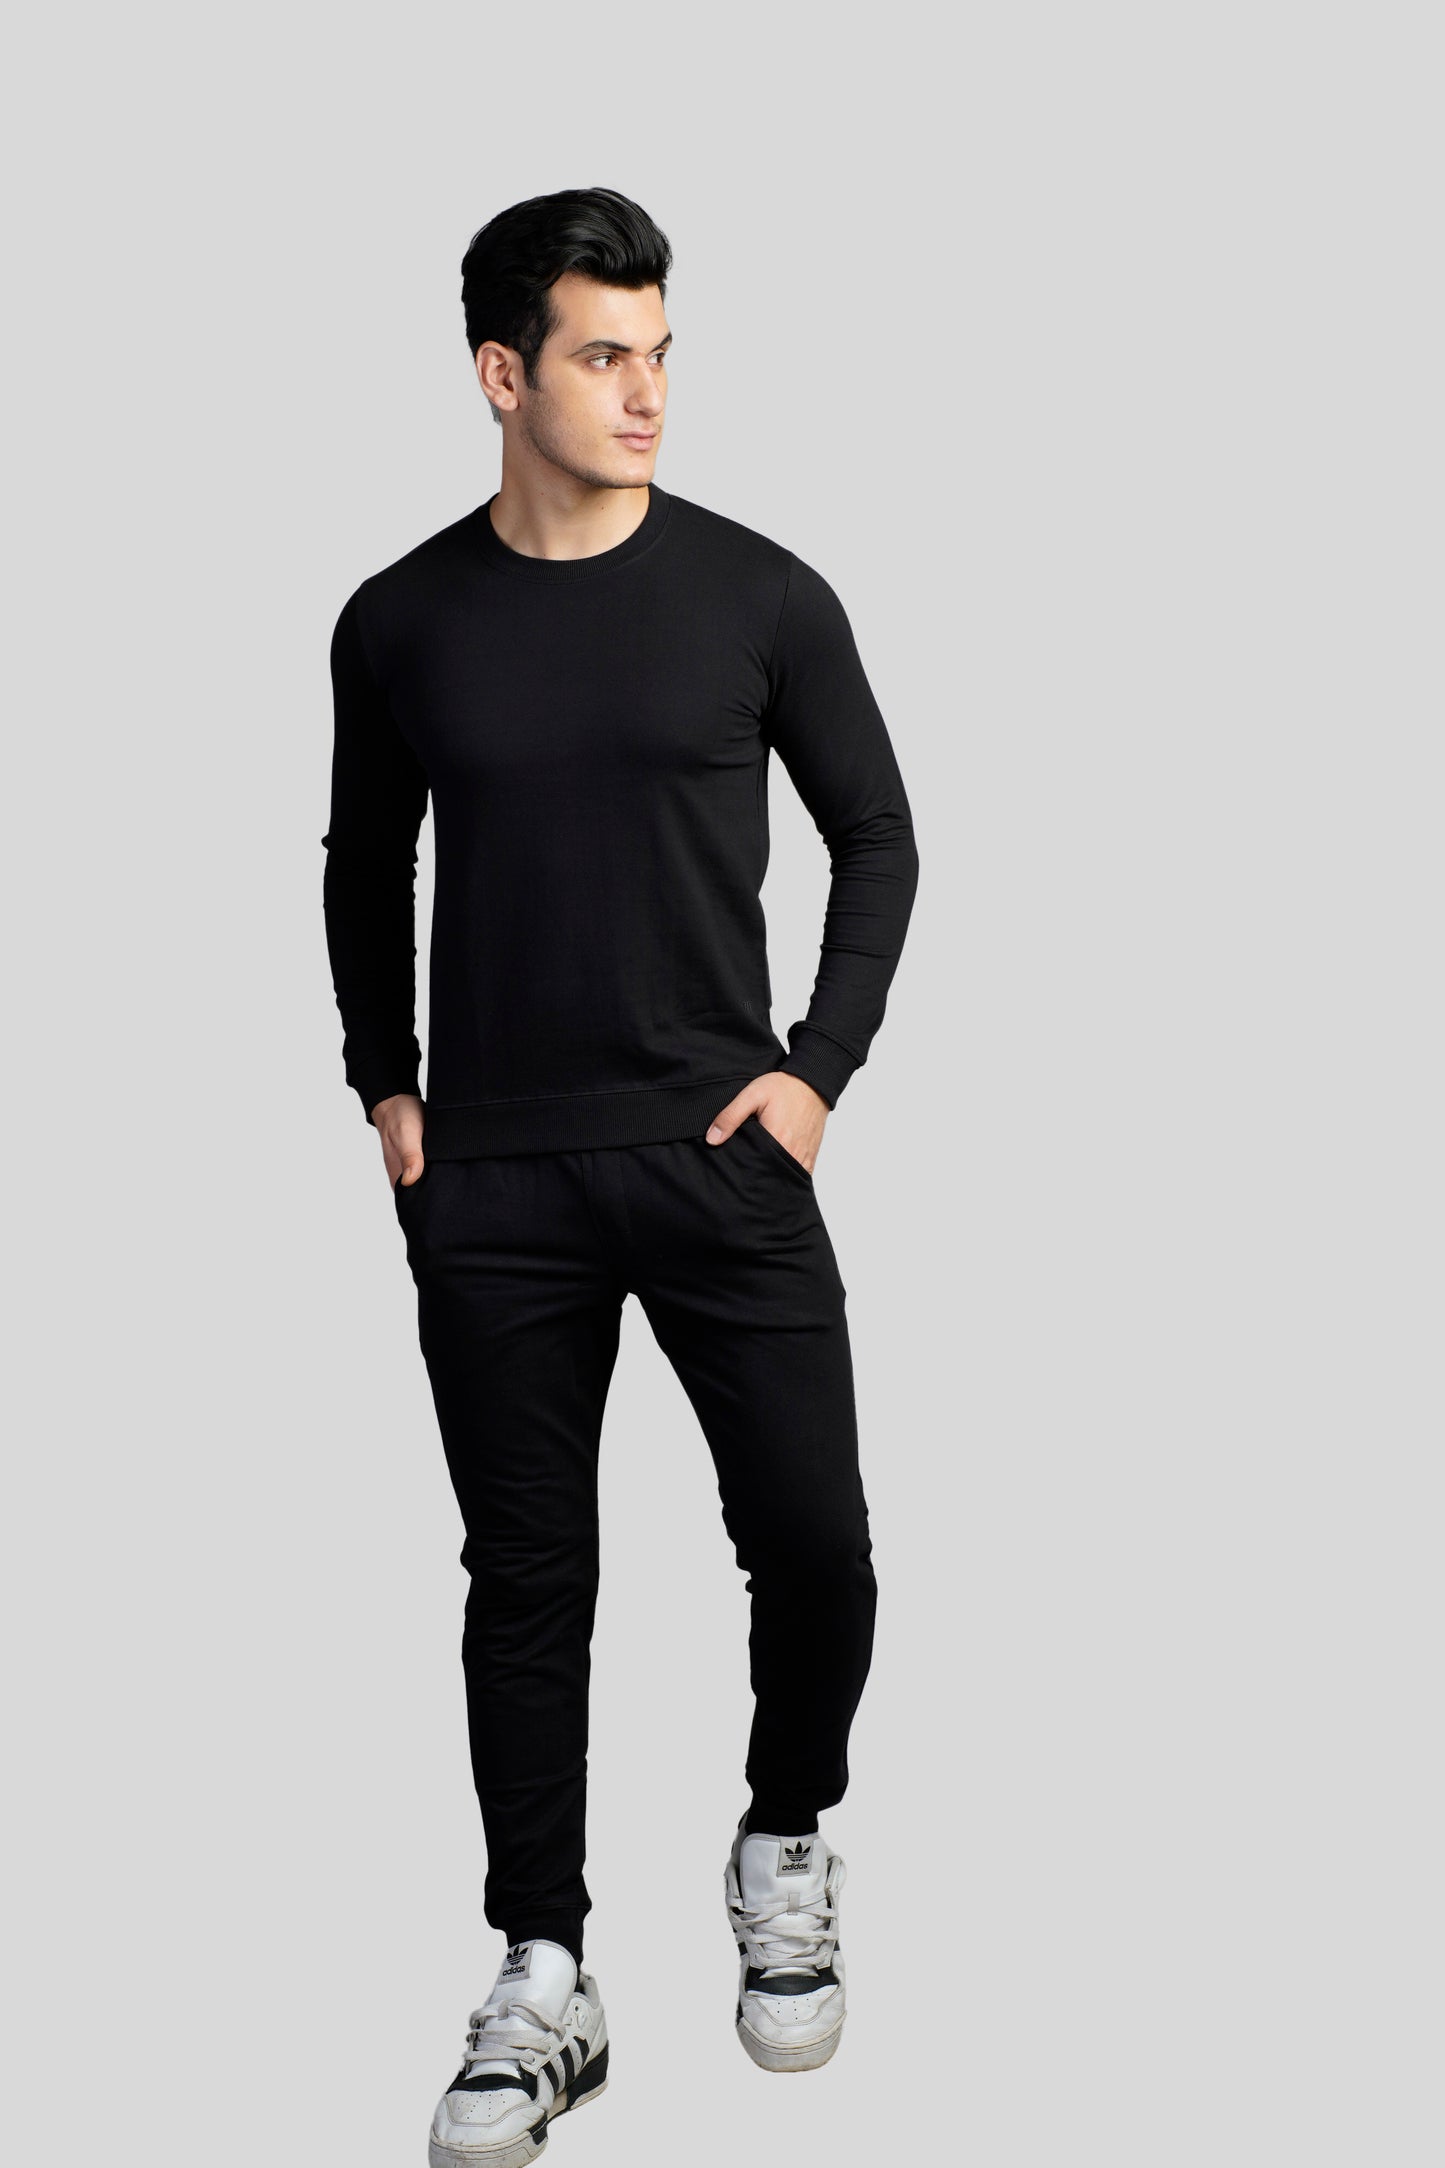 Load image into Gallery viewer, Prizmwear Black Sweatshirt365 - Prizmwear
